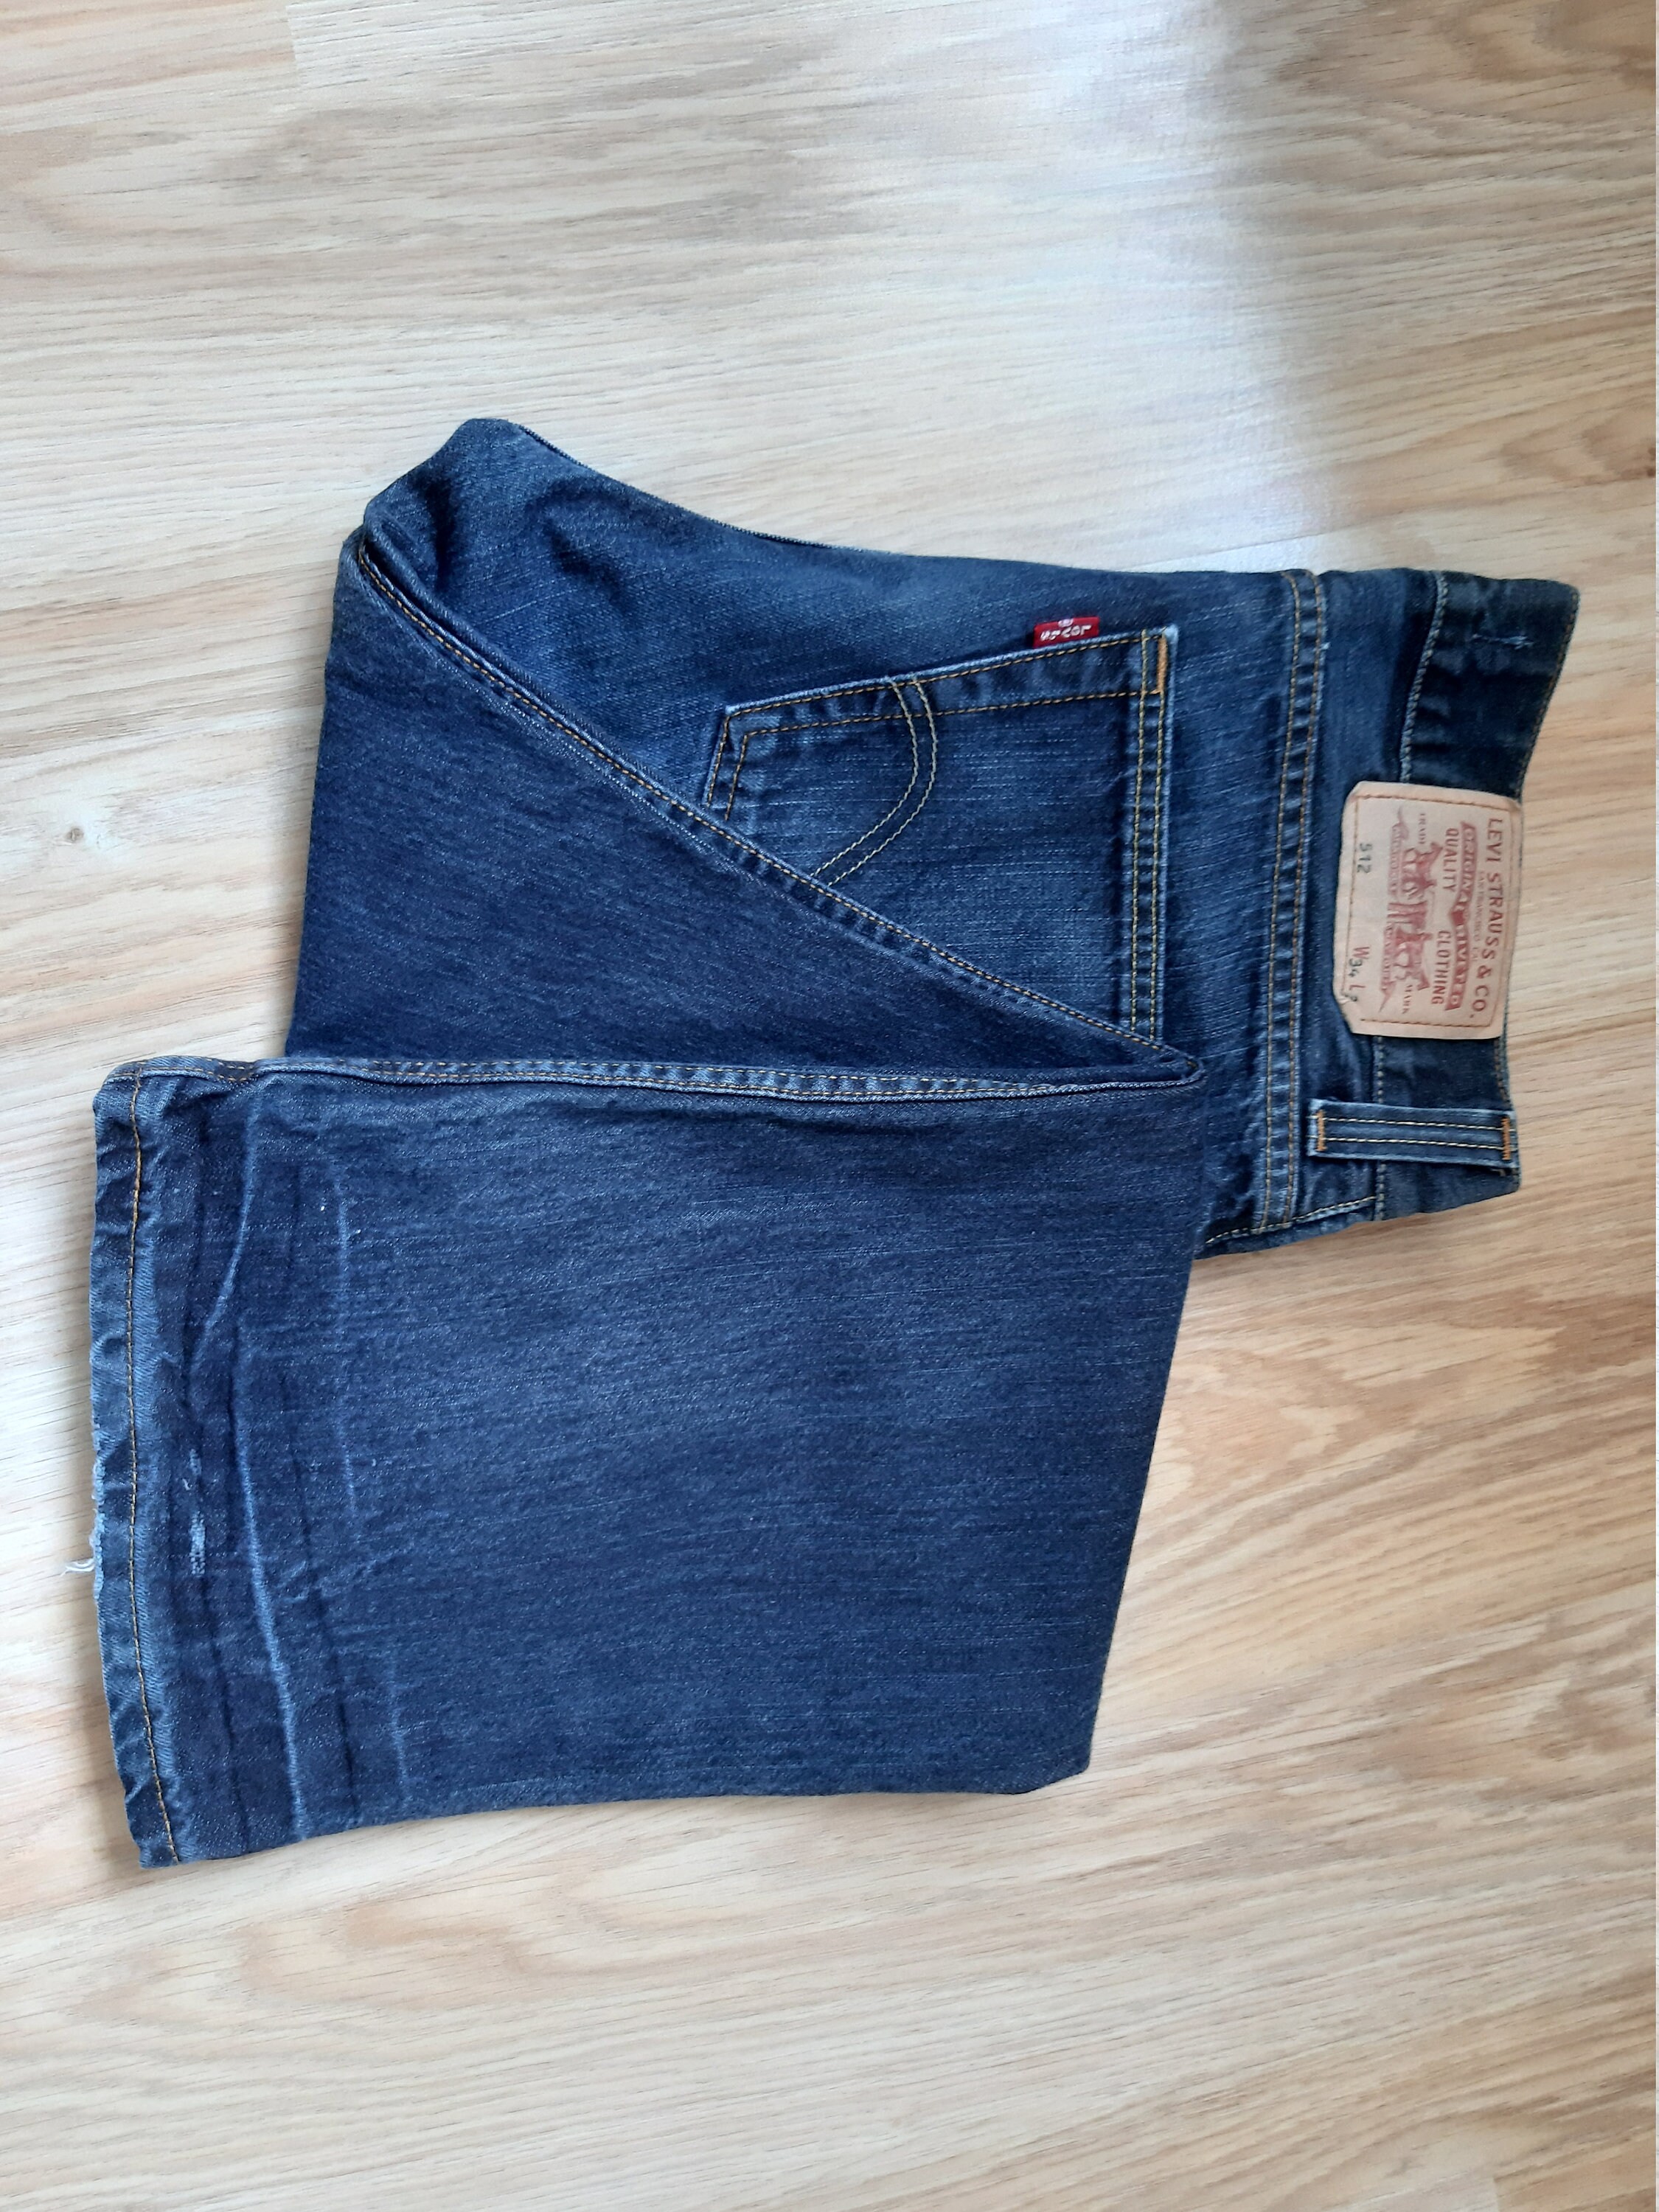 Vintage Classic Jeans 512 W34 L32 Jeans Straight Leg Grunge - Etsy